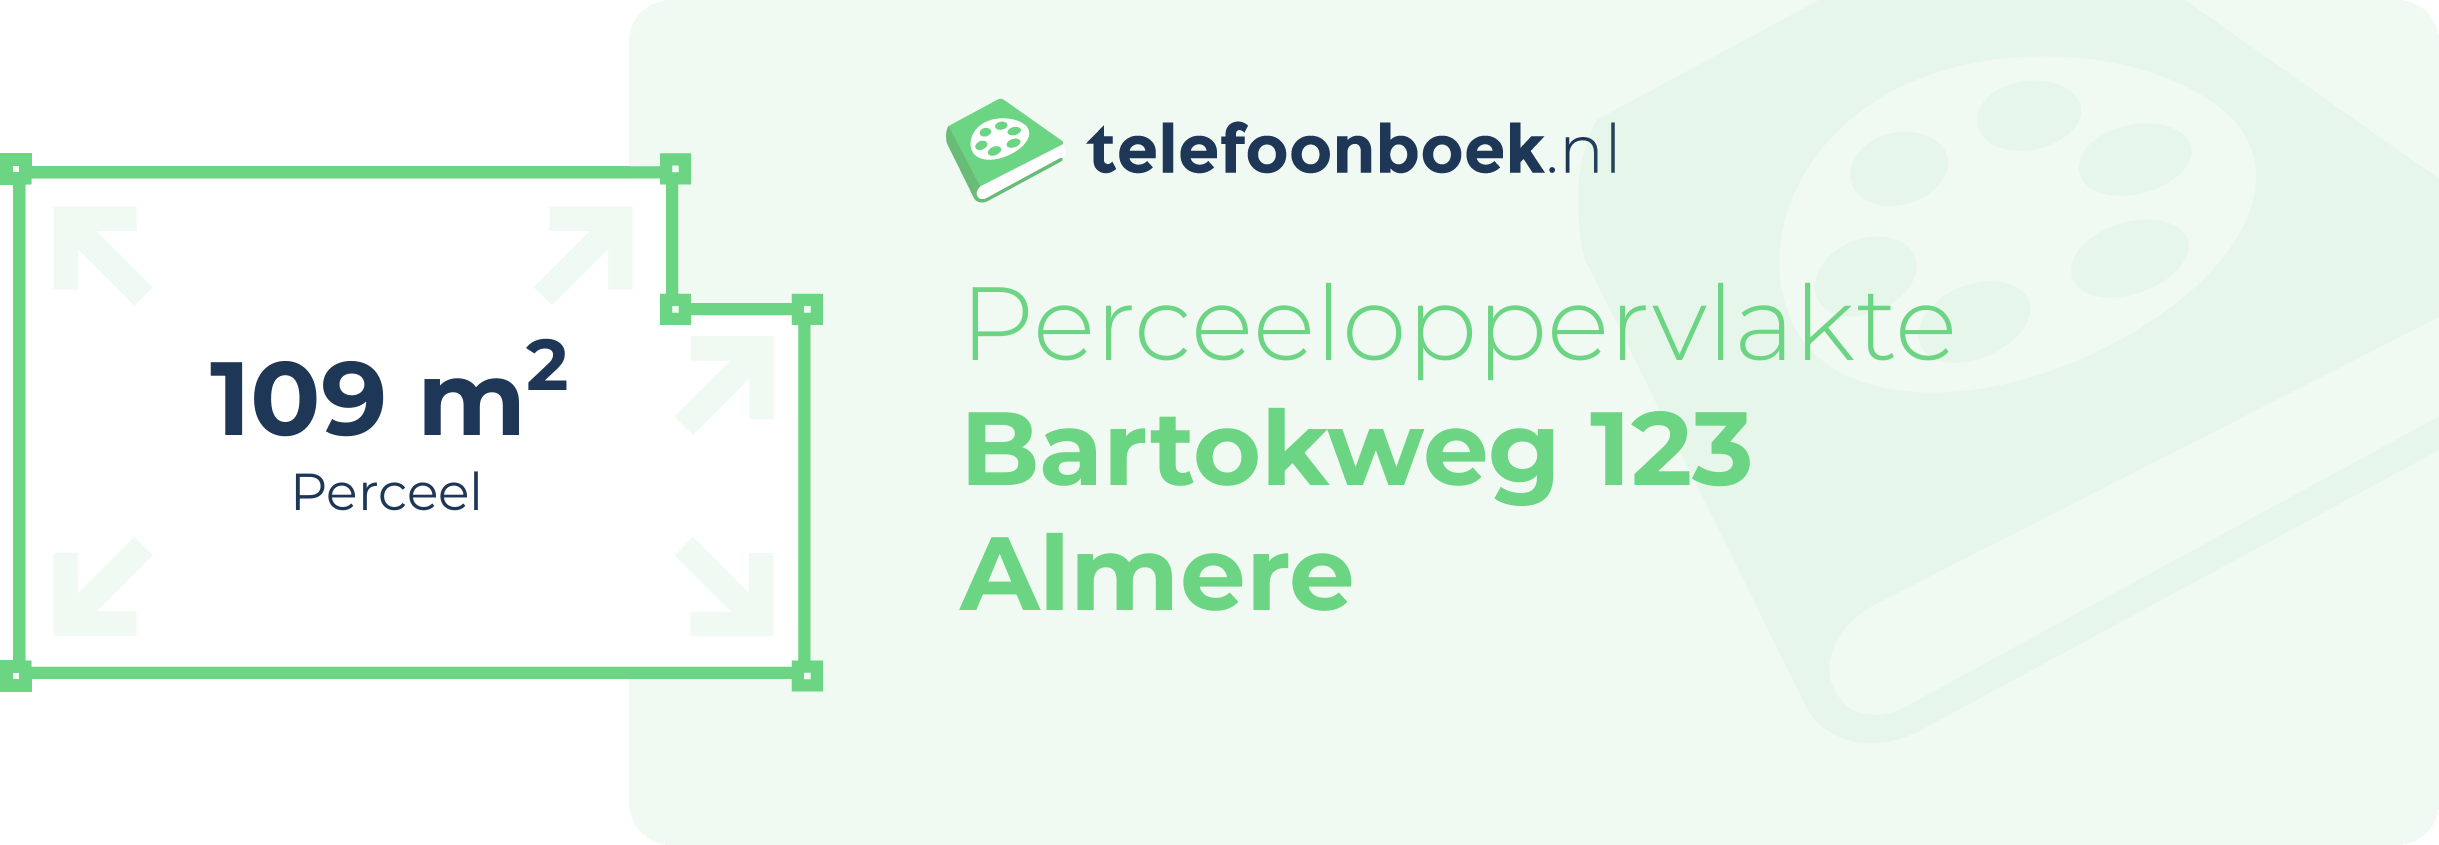 Perceeloppervlakte Bartokweg 123 Almere